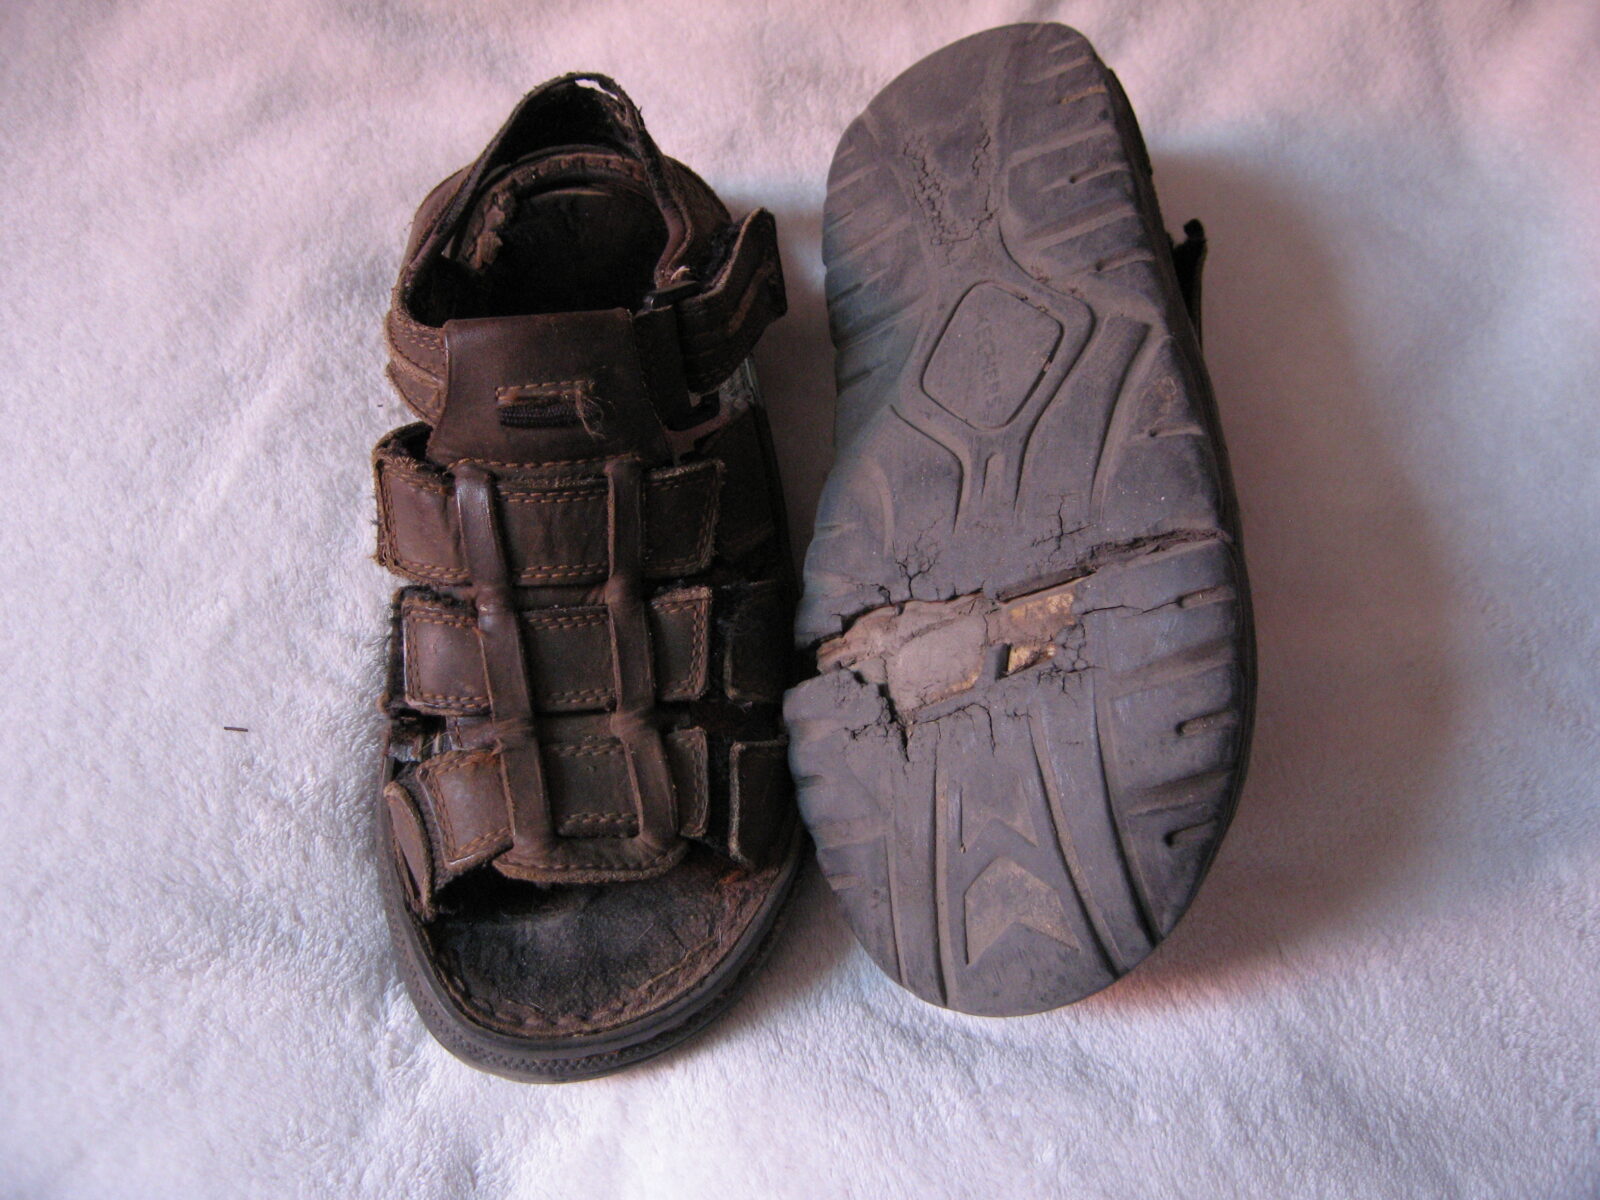 Sandals that needed Repair